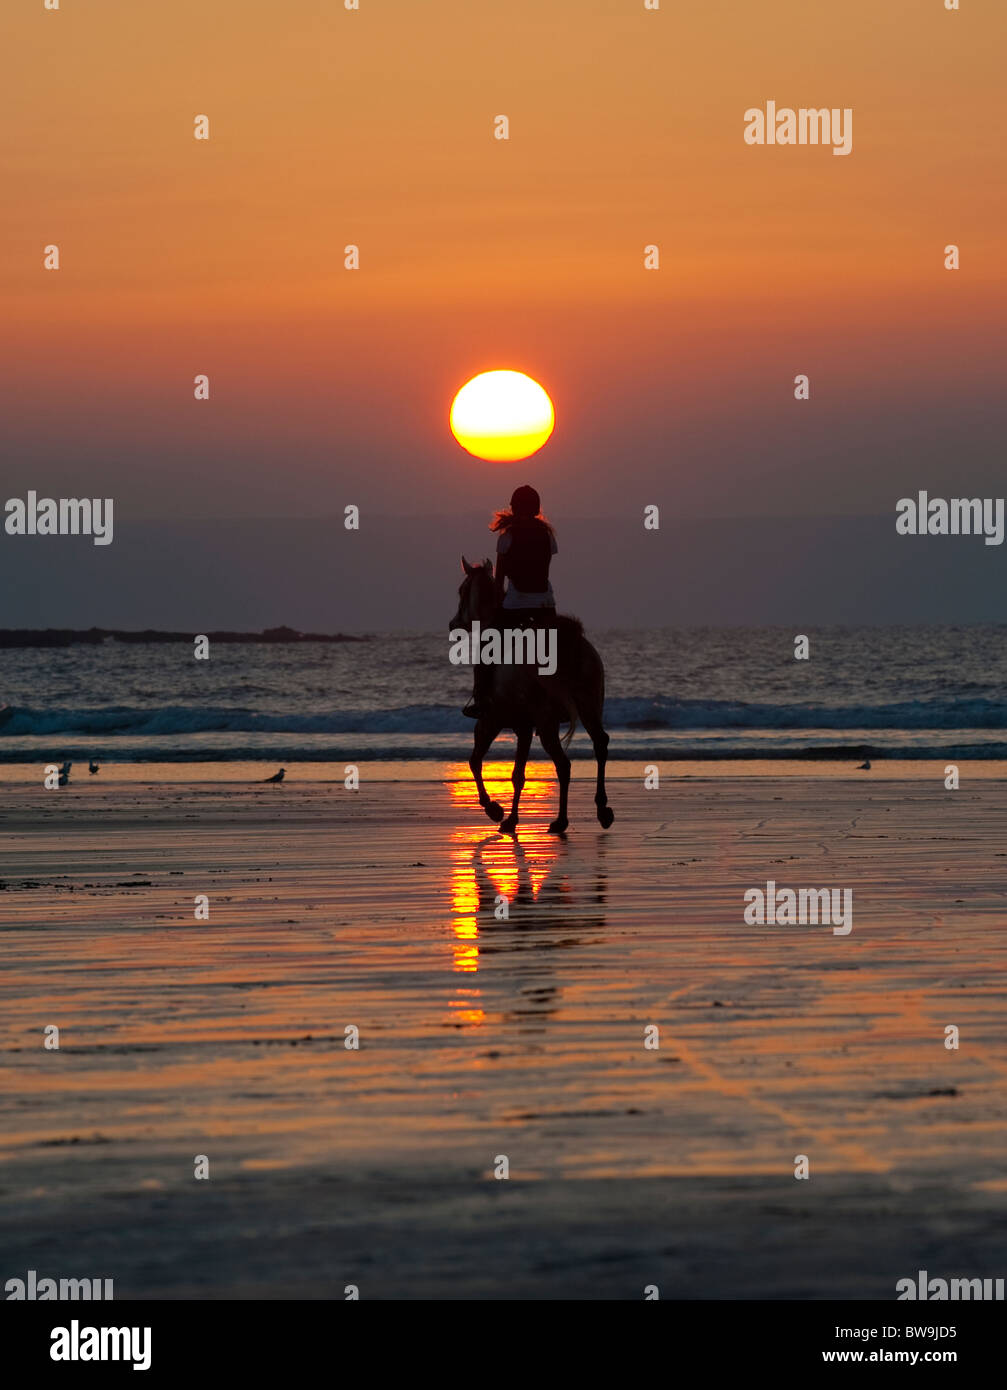 Girl riding pony  on beach at sunset, Westward Ho! Devon UK Stock Photo